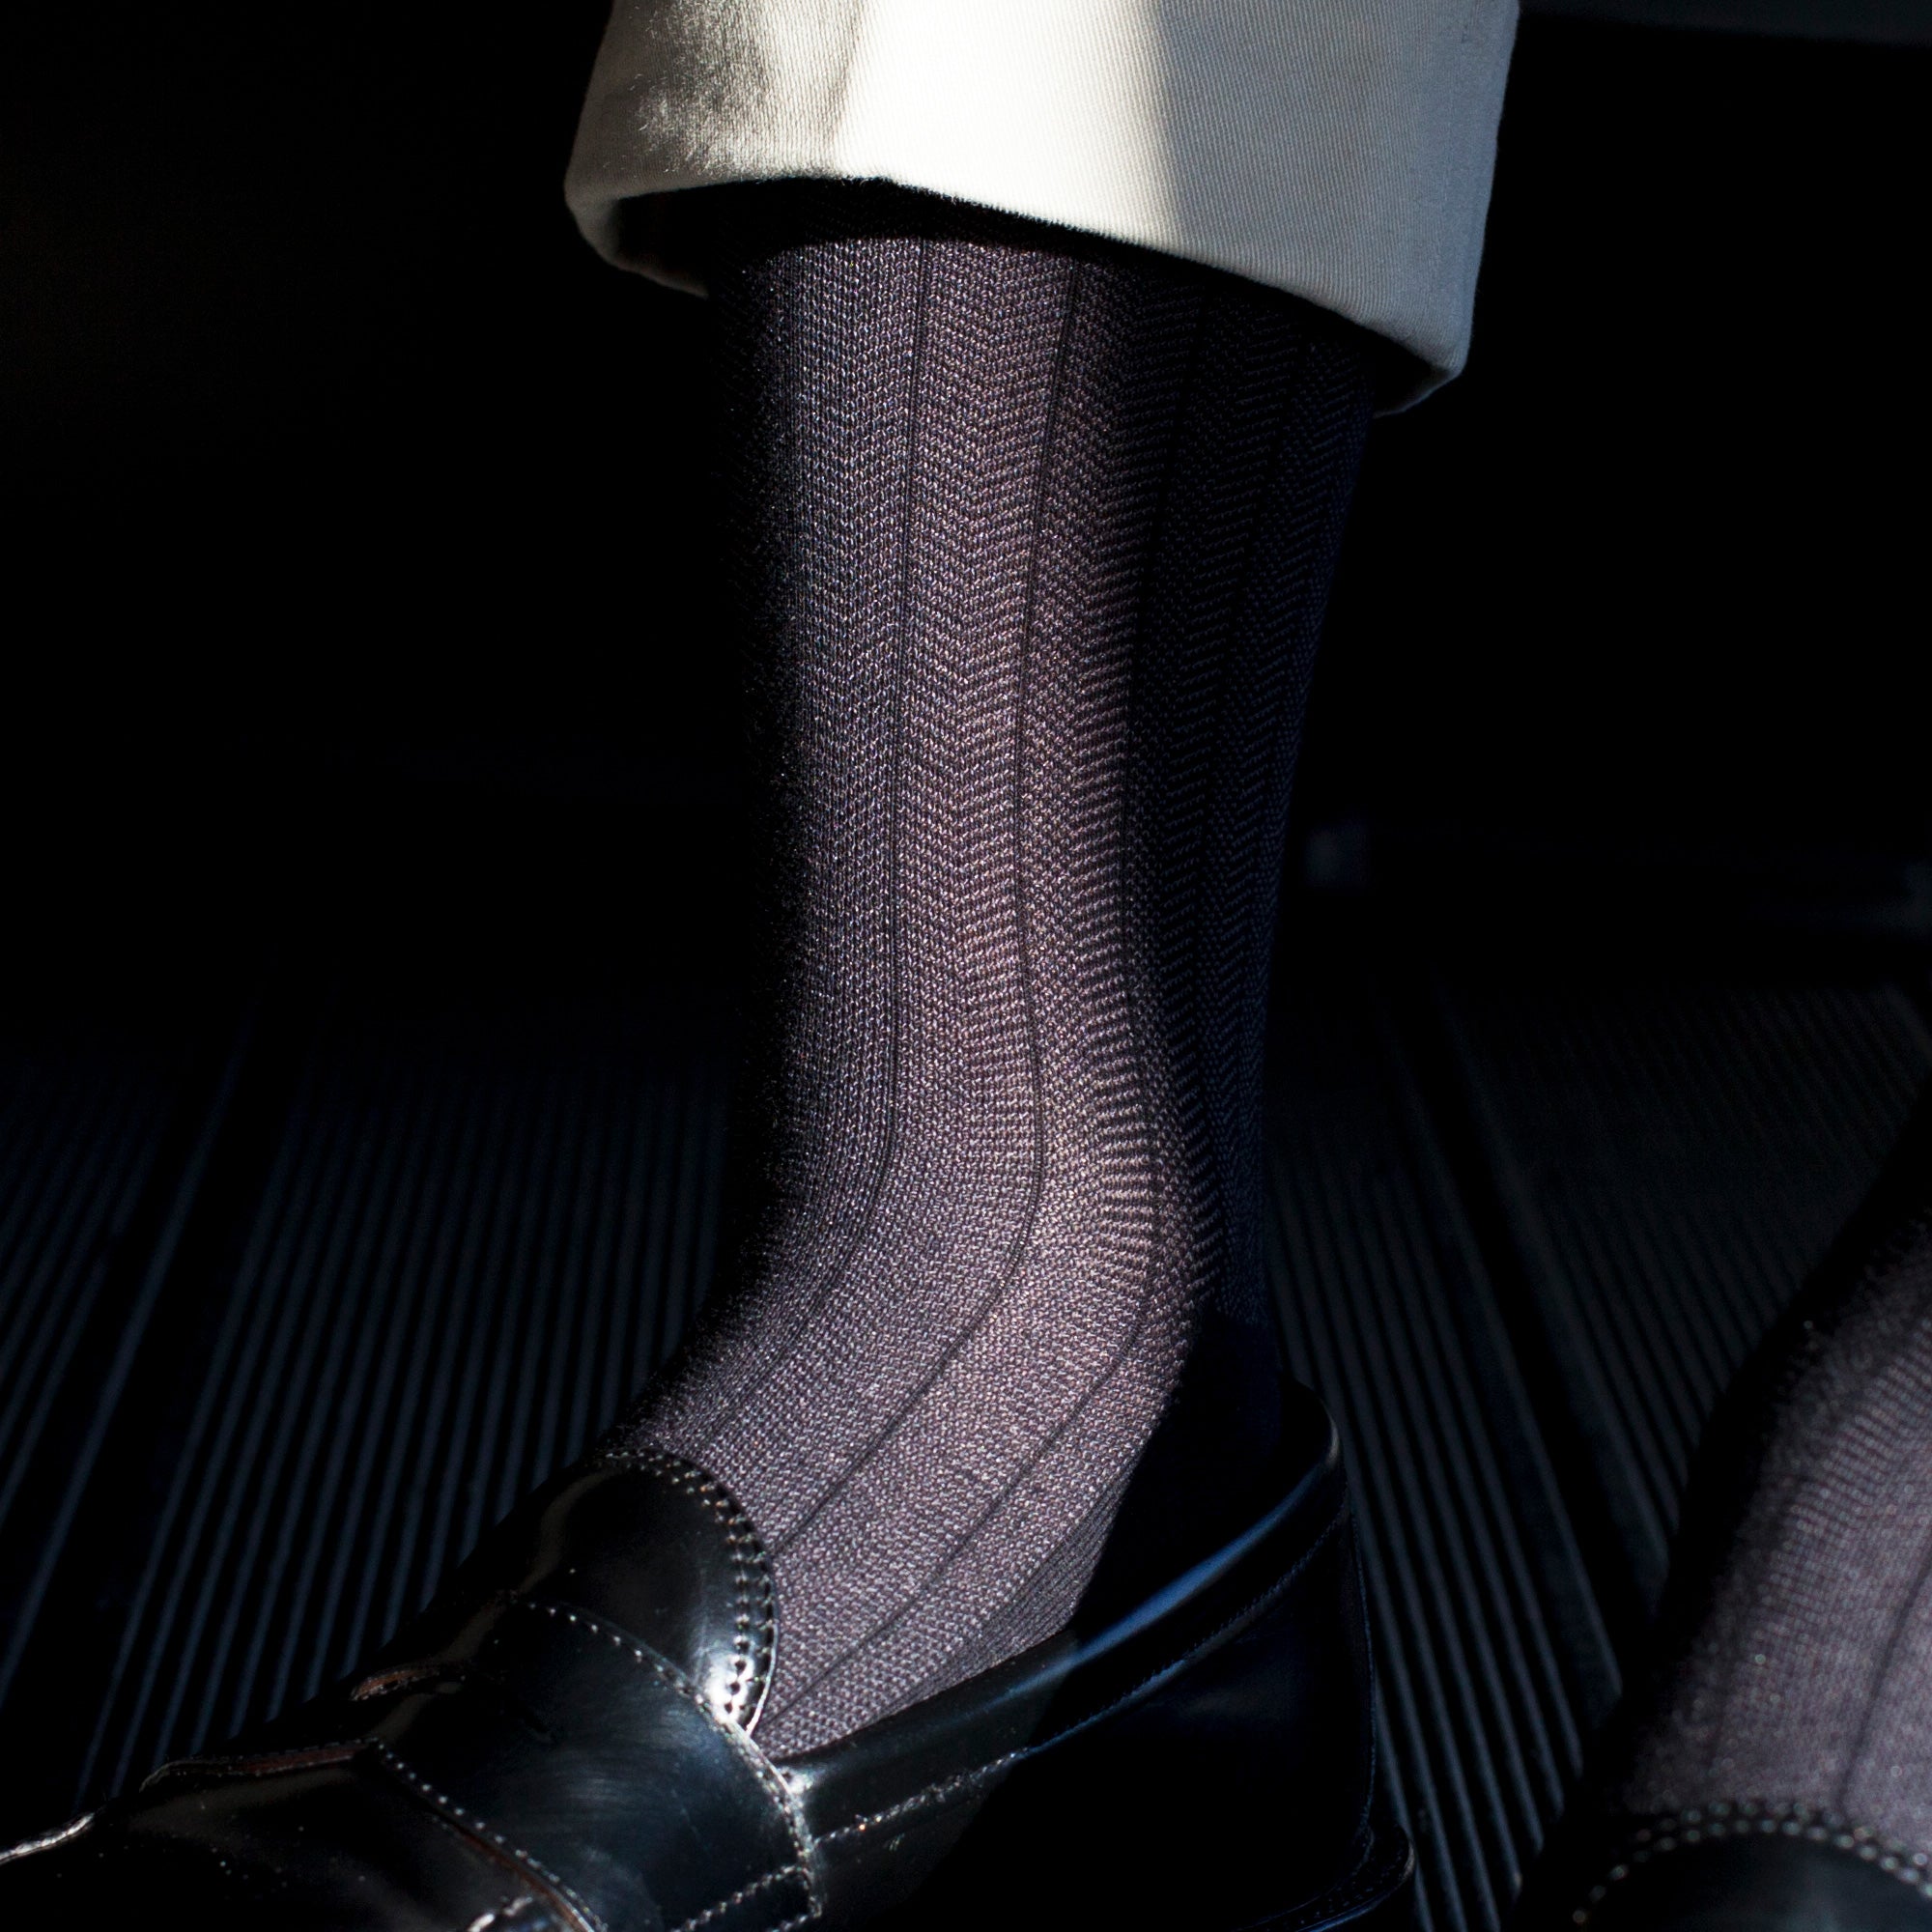 Herringbone - 0103 - Votta Socks